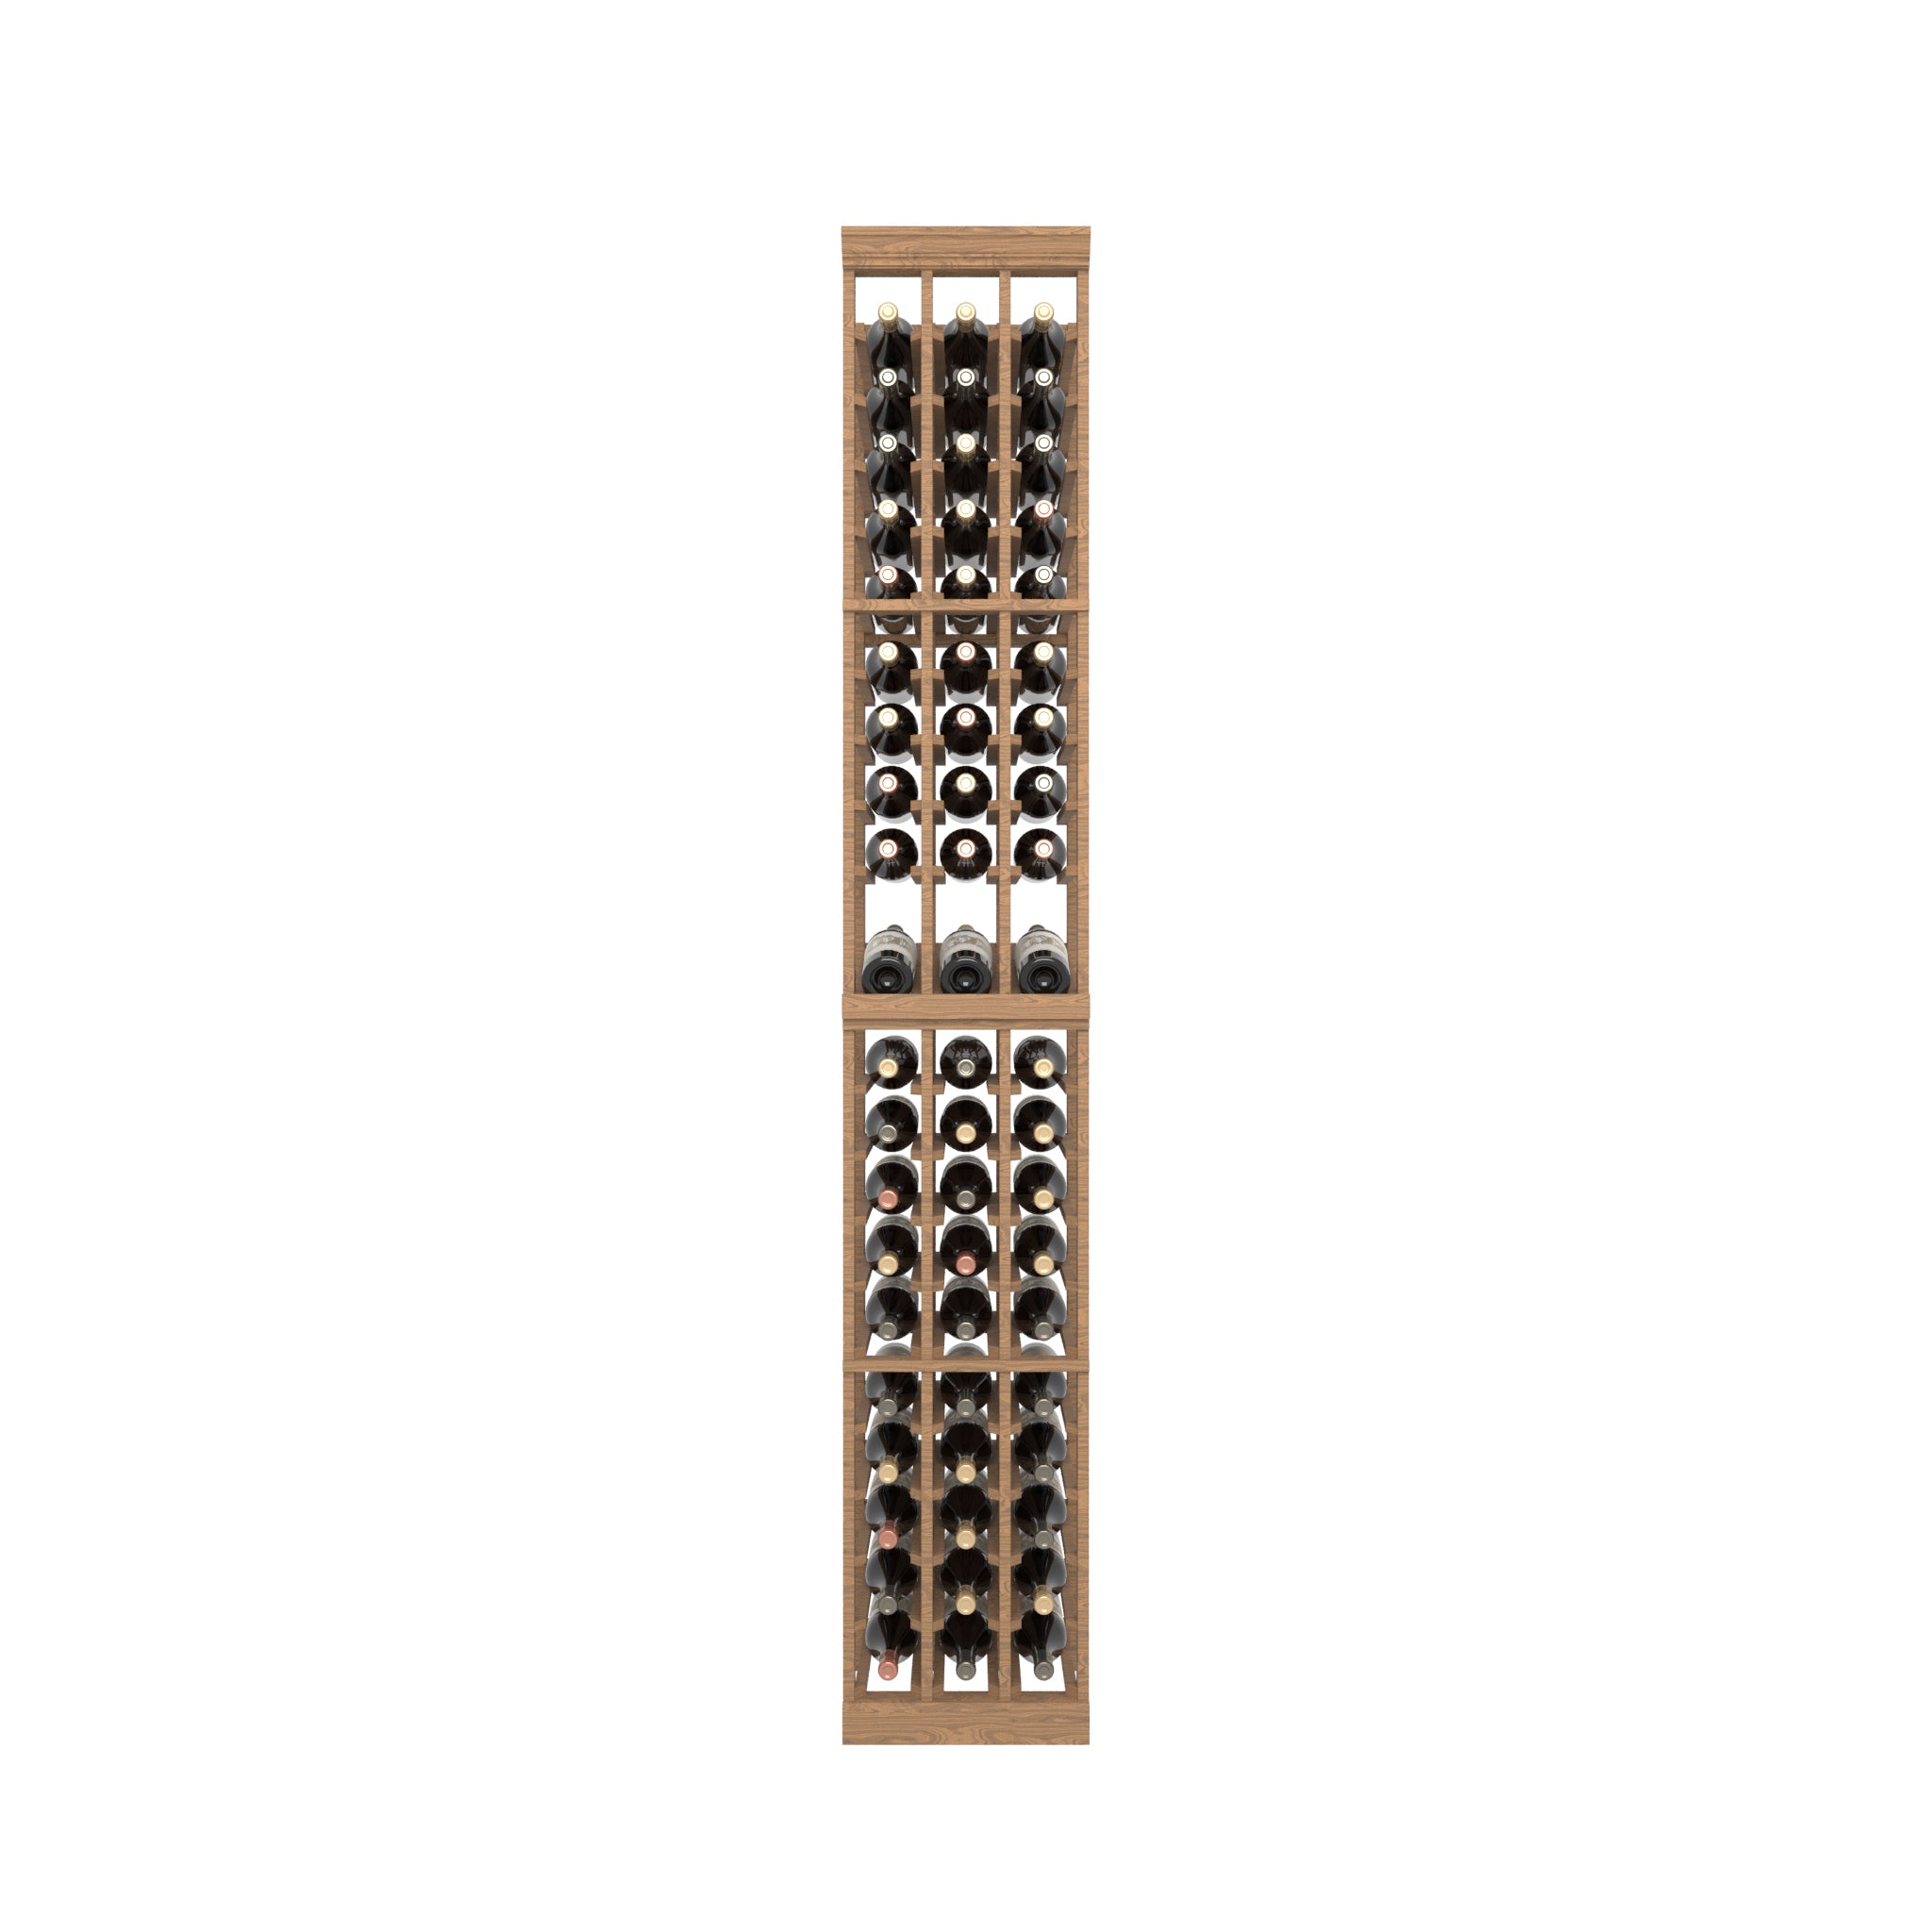 03 Column Rack with Display Row - 750ml Bottles